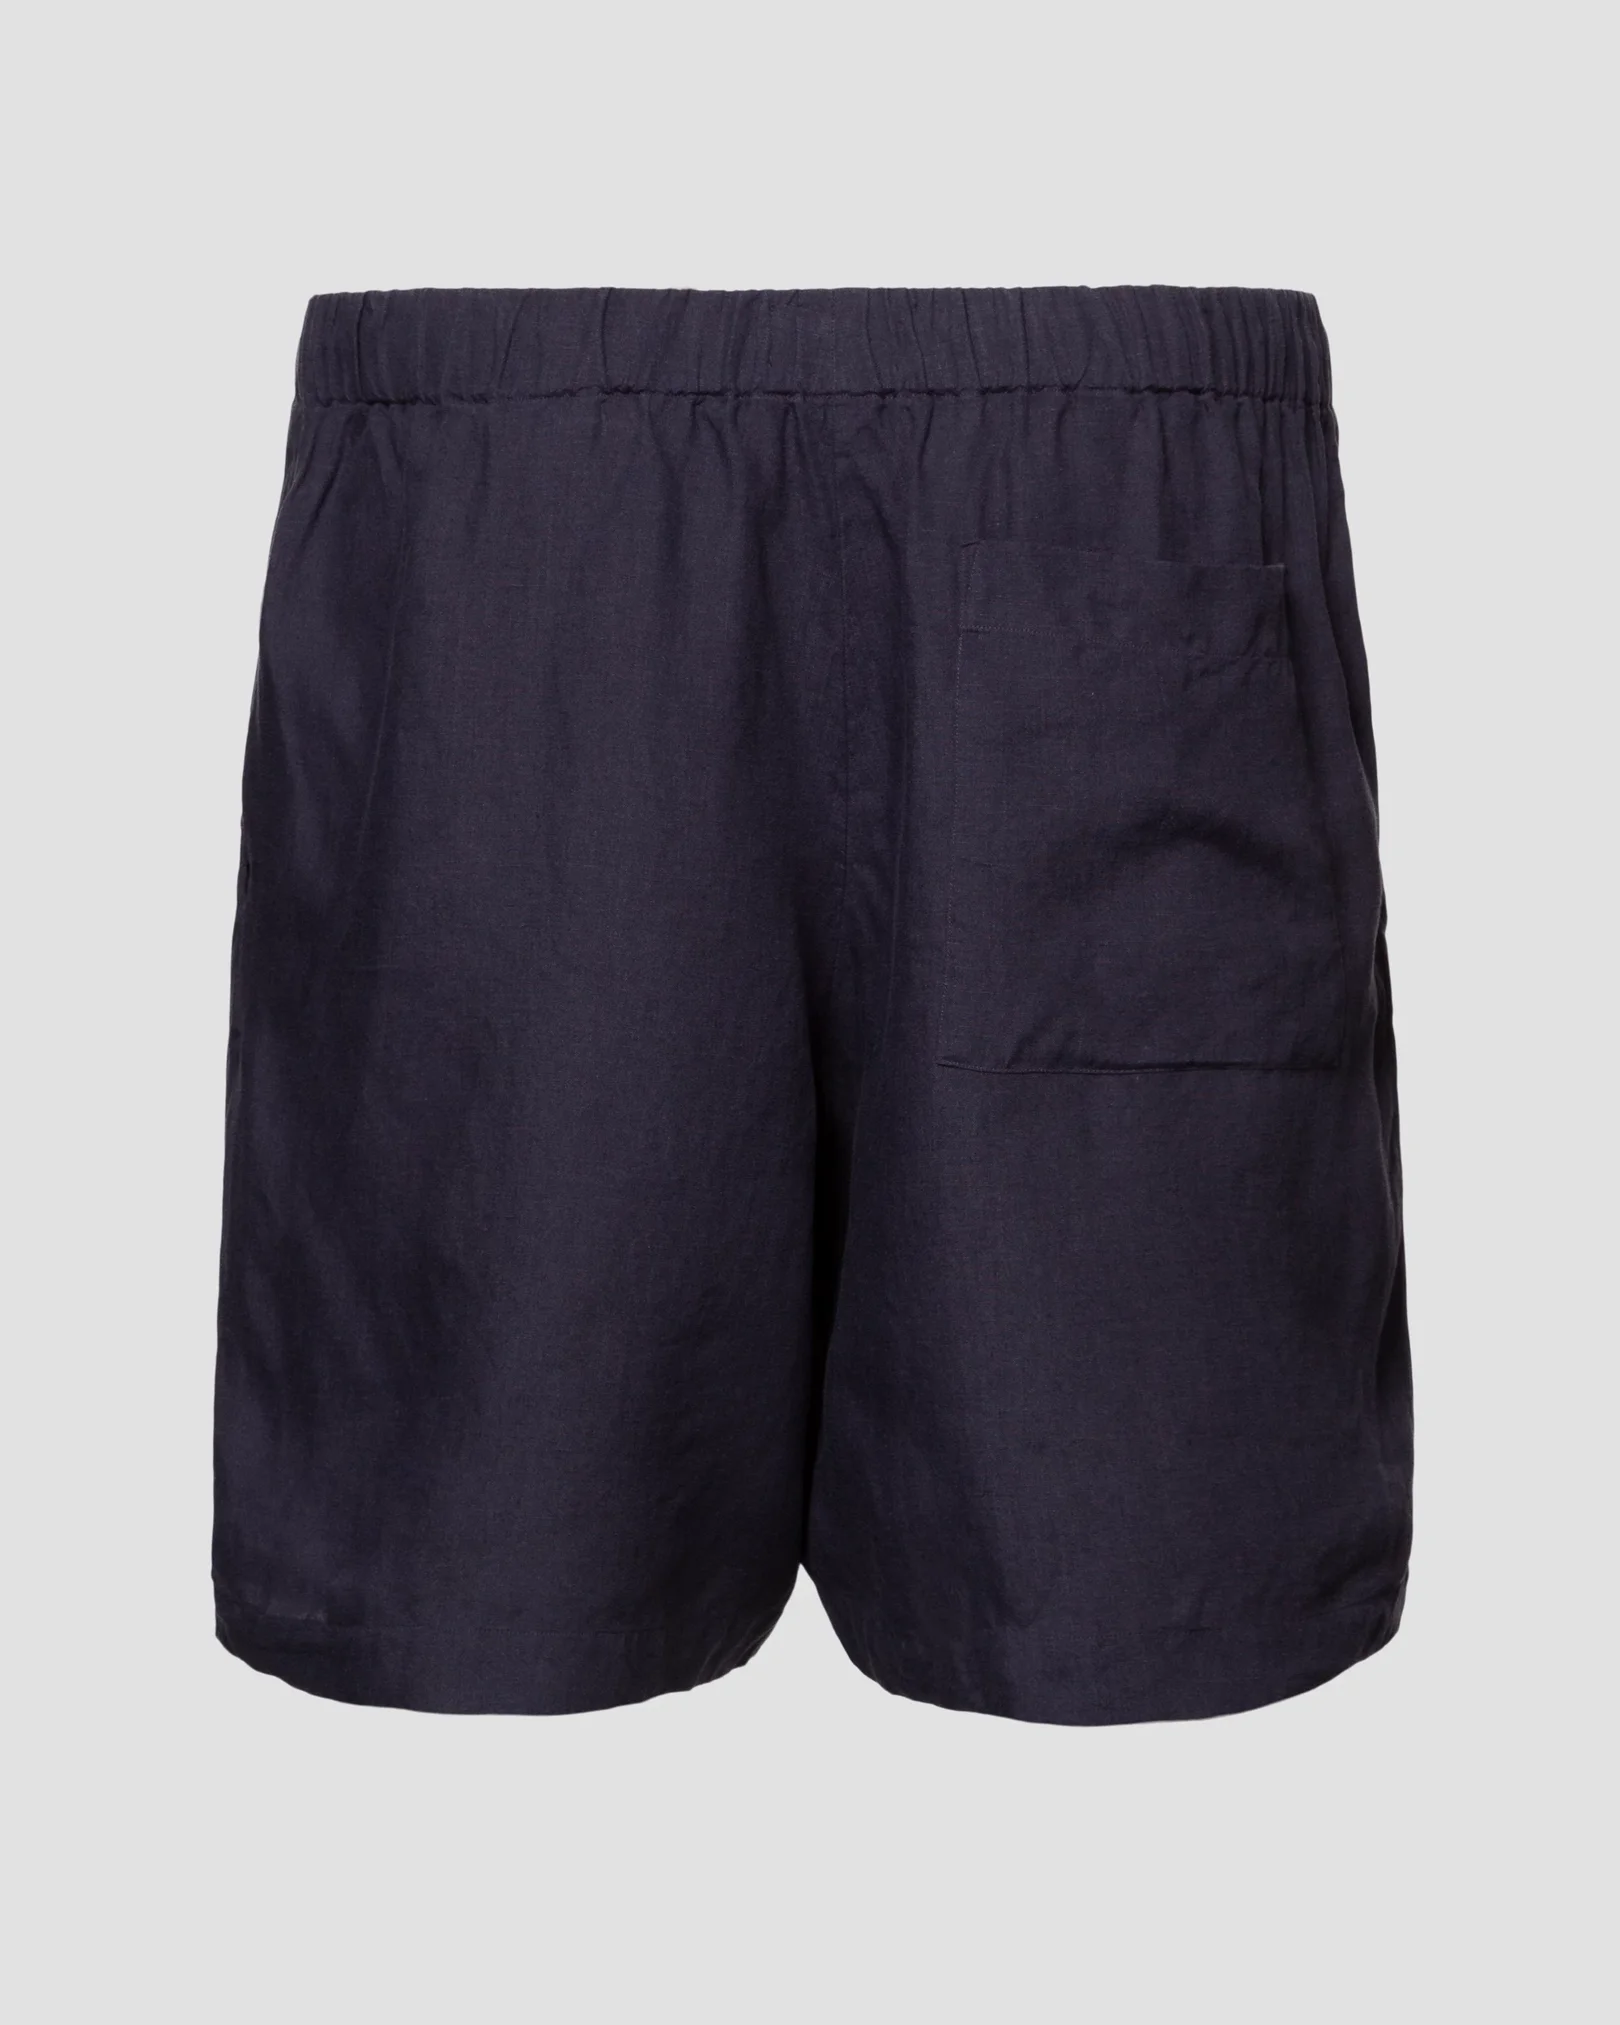 Eton - navy blue plain linen shorts